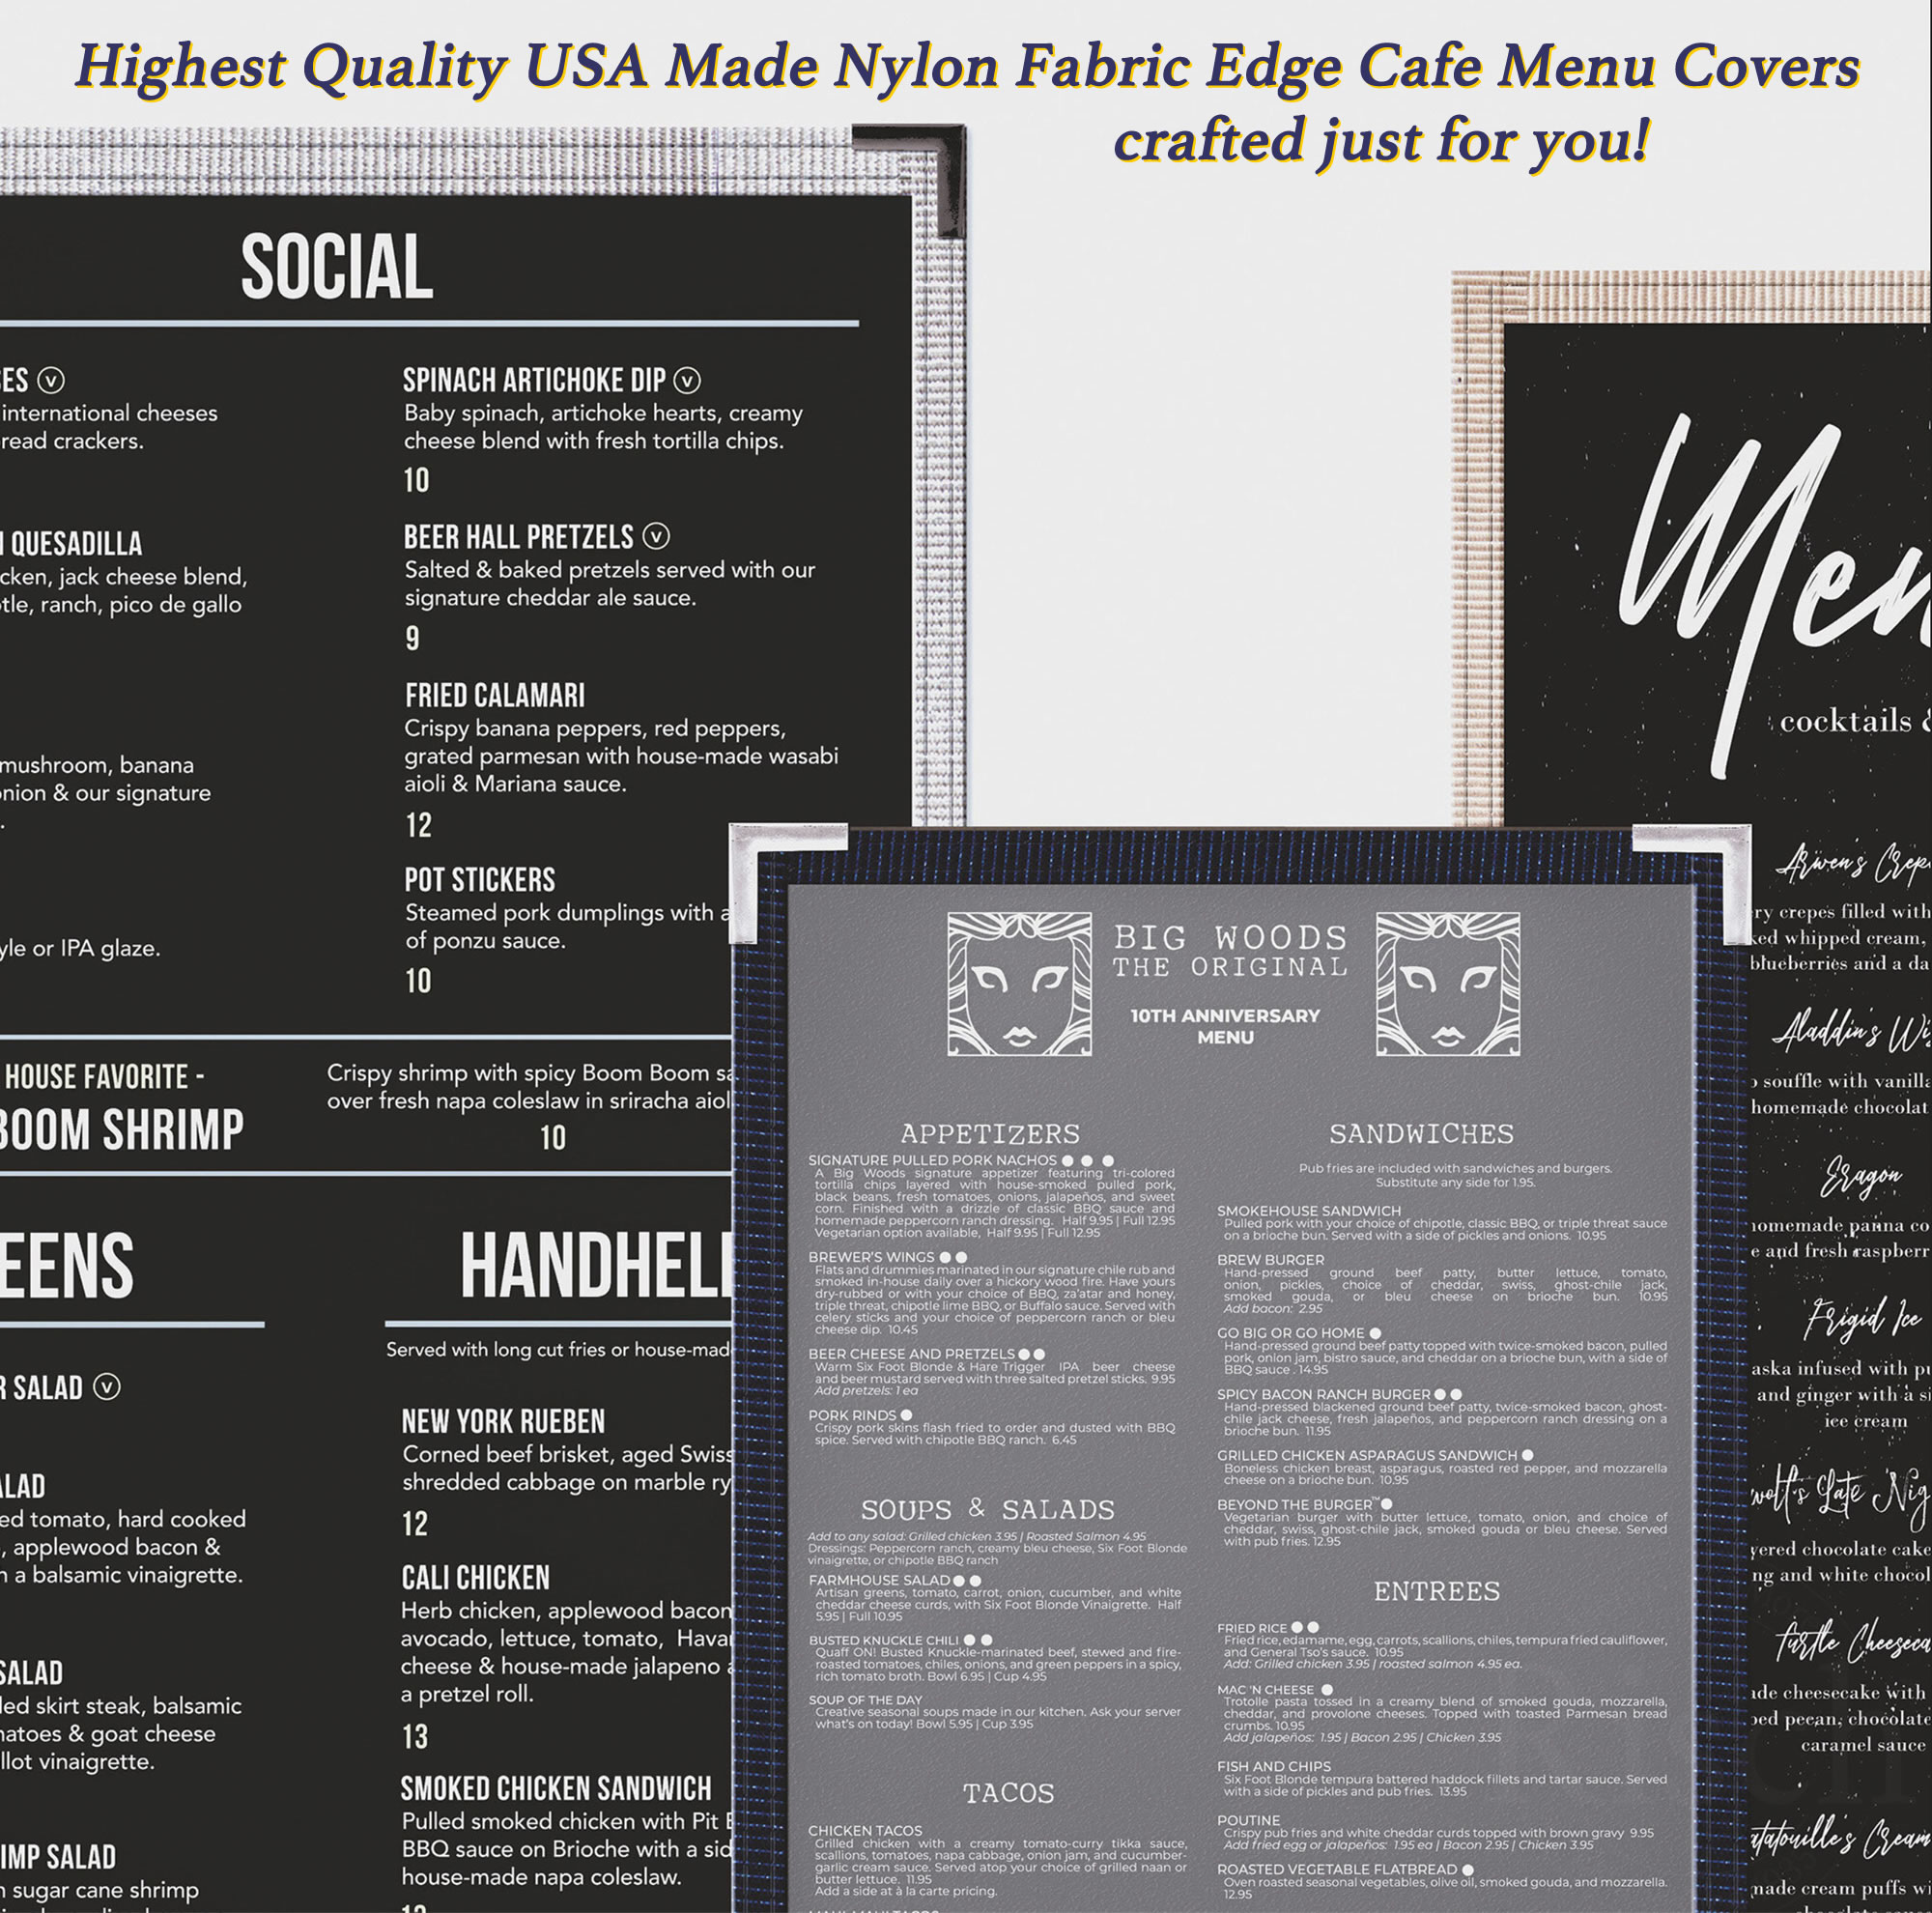 Highest Quality USA Made Menu Covers with a gorgeous fabric edge design.